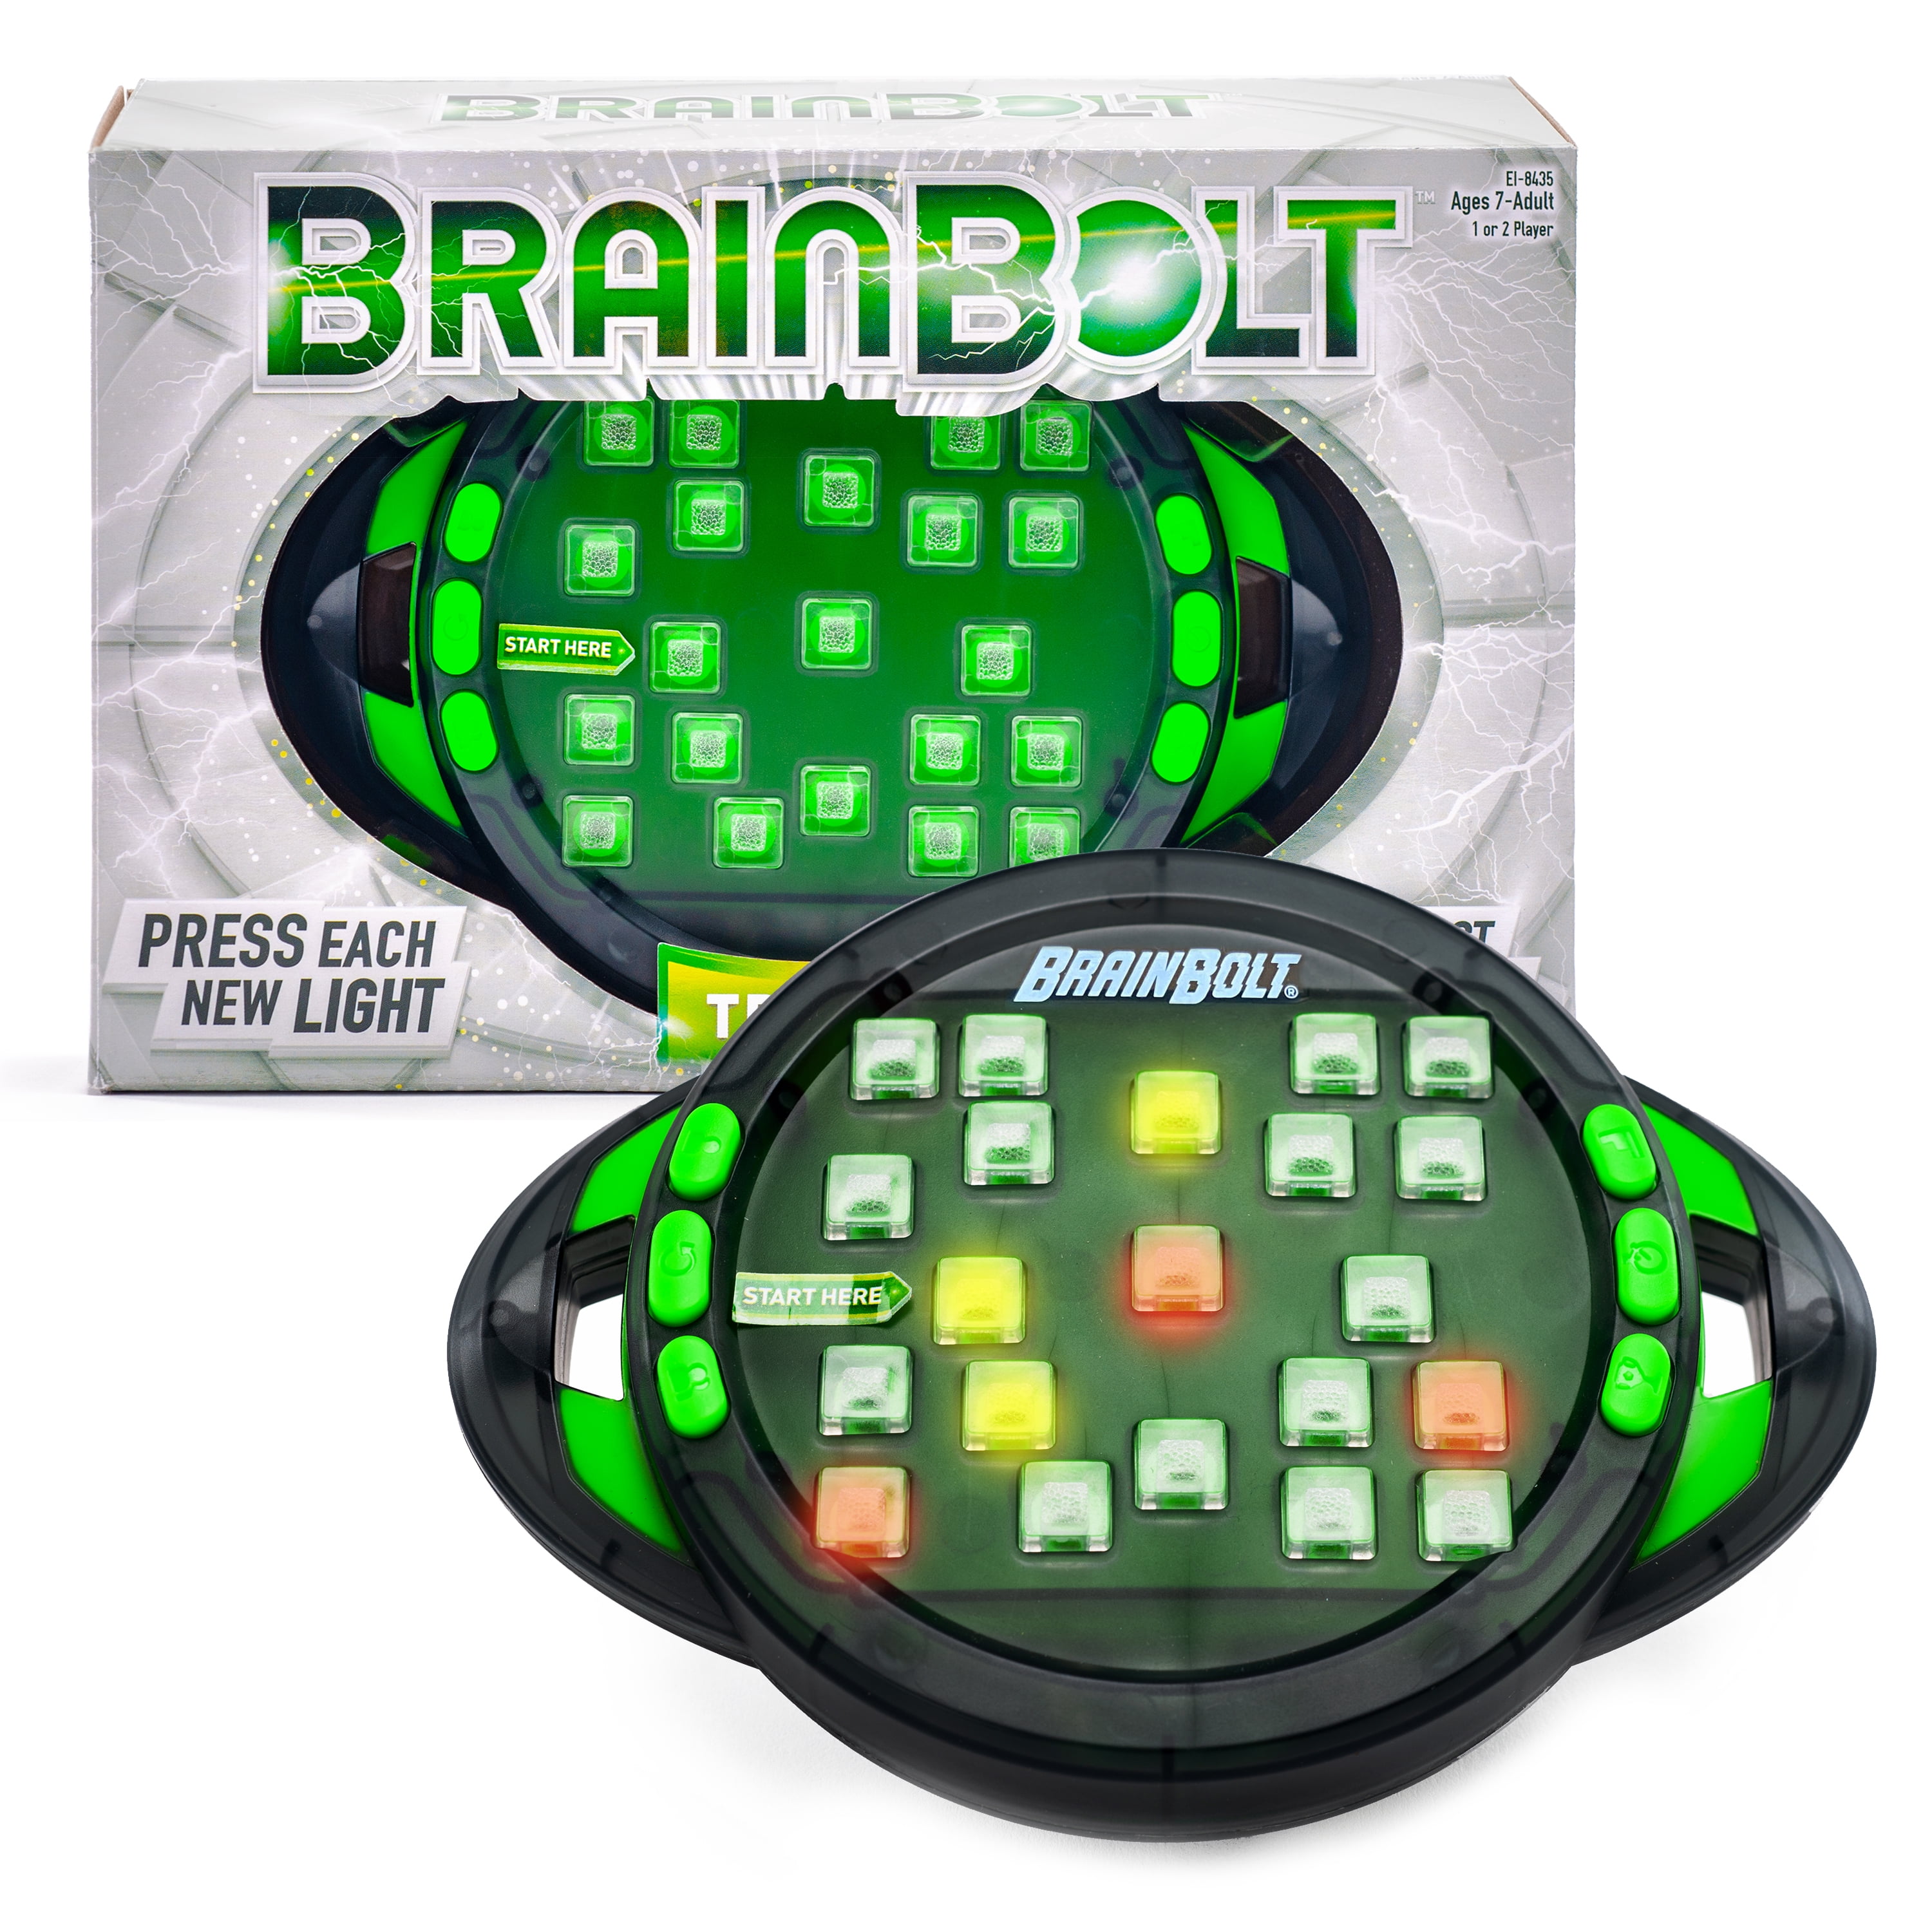 SmartGames 1 Player Paper Brainteaser